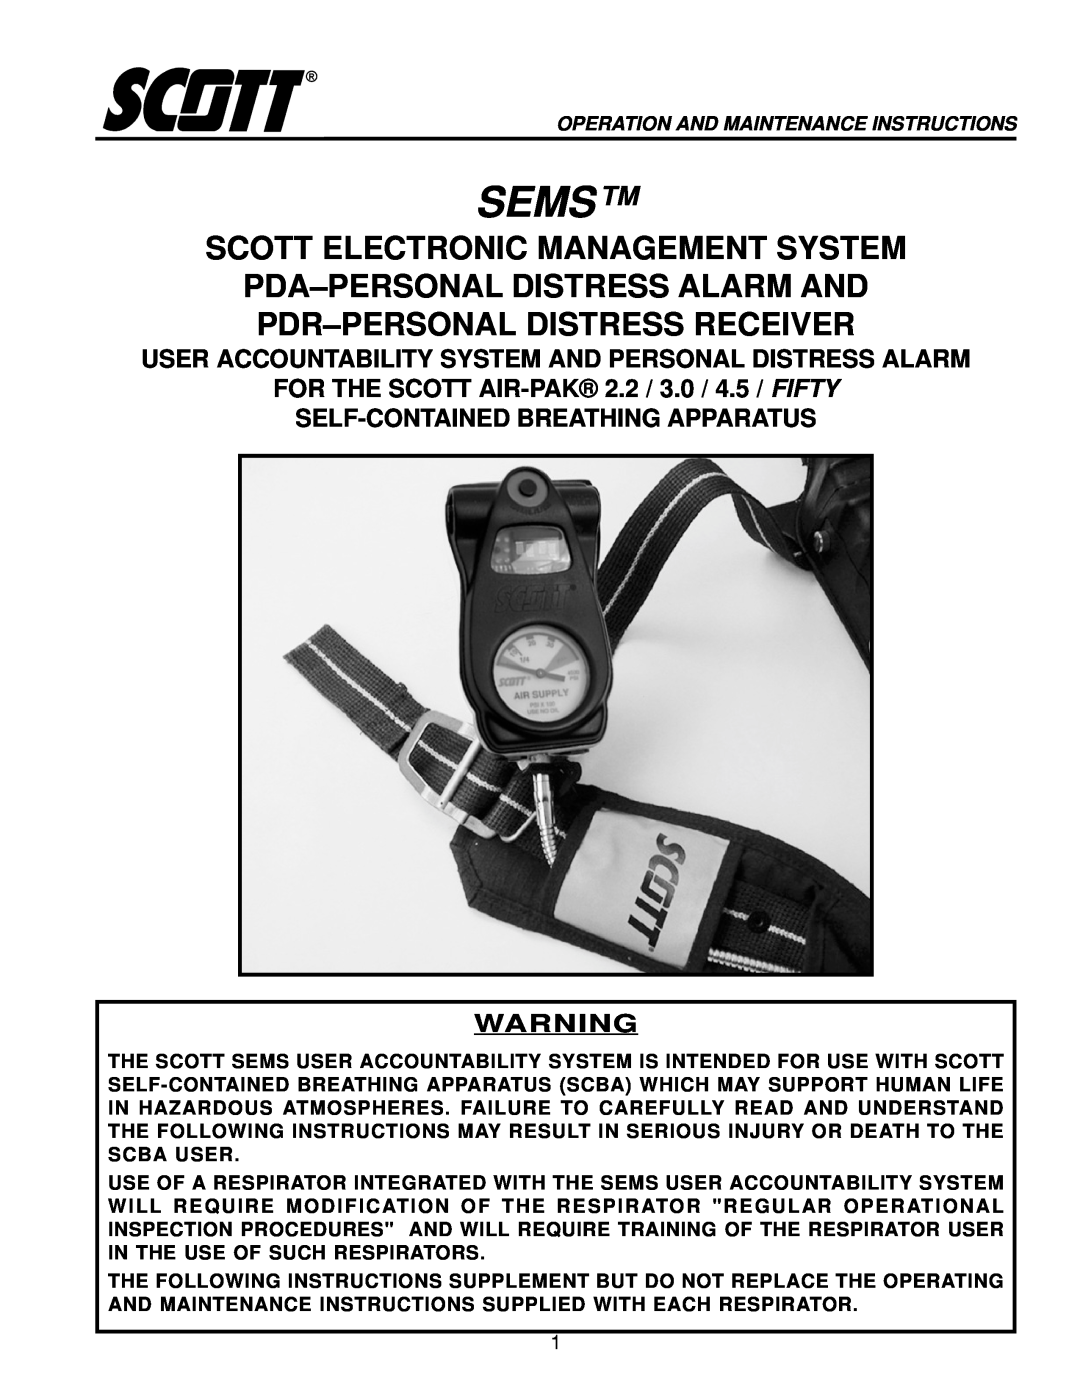 Scott 3, 4.5, 2.2 manual Operation And Maintenance Instructions, Sems, Scott Electronic Management System 